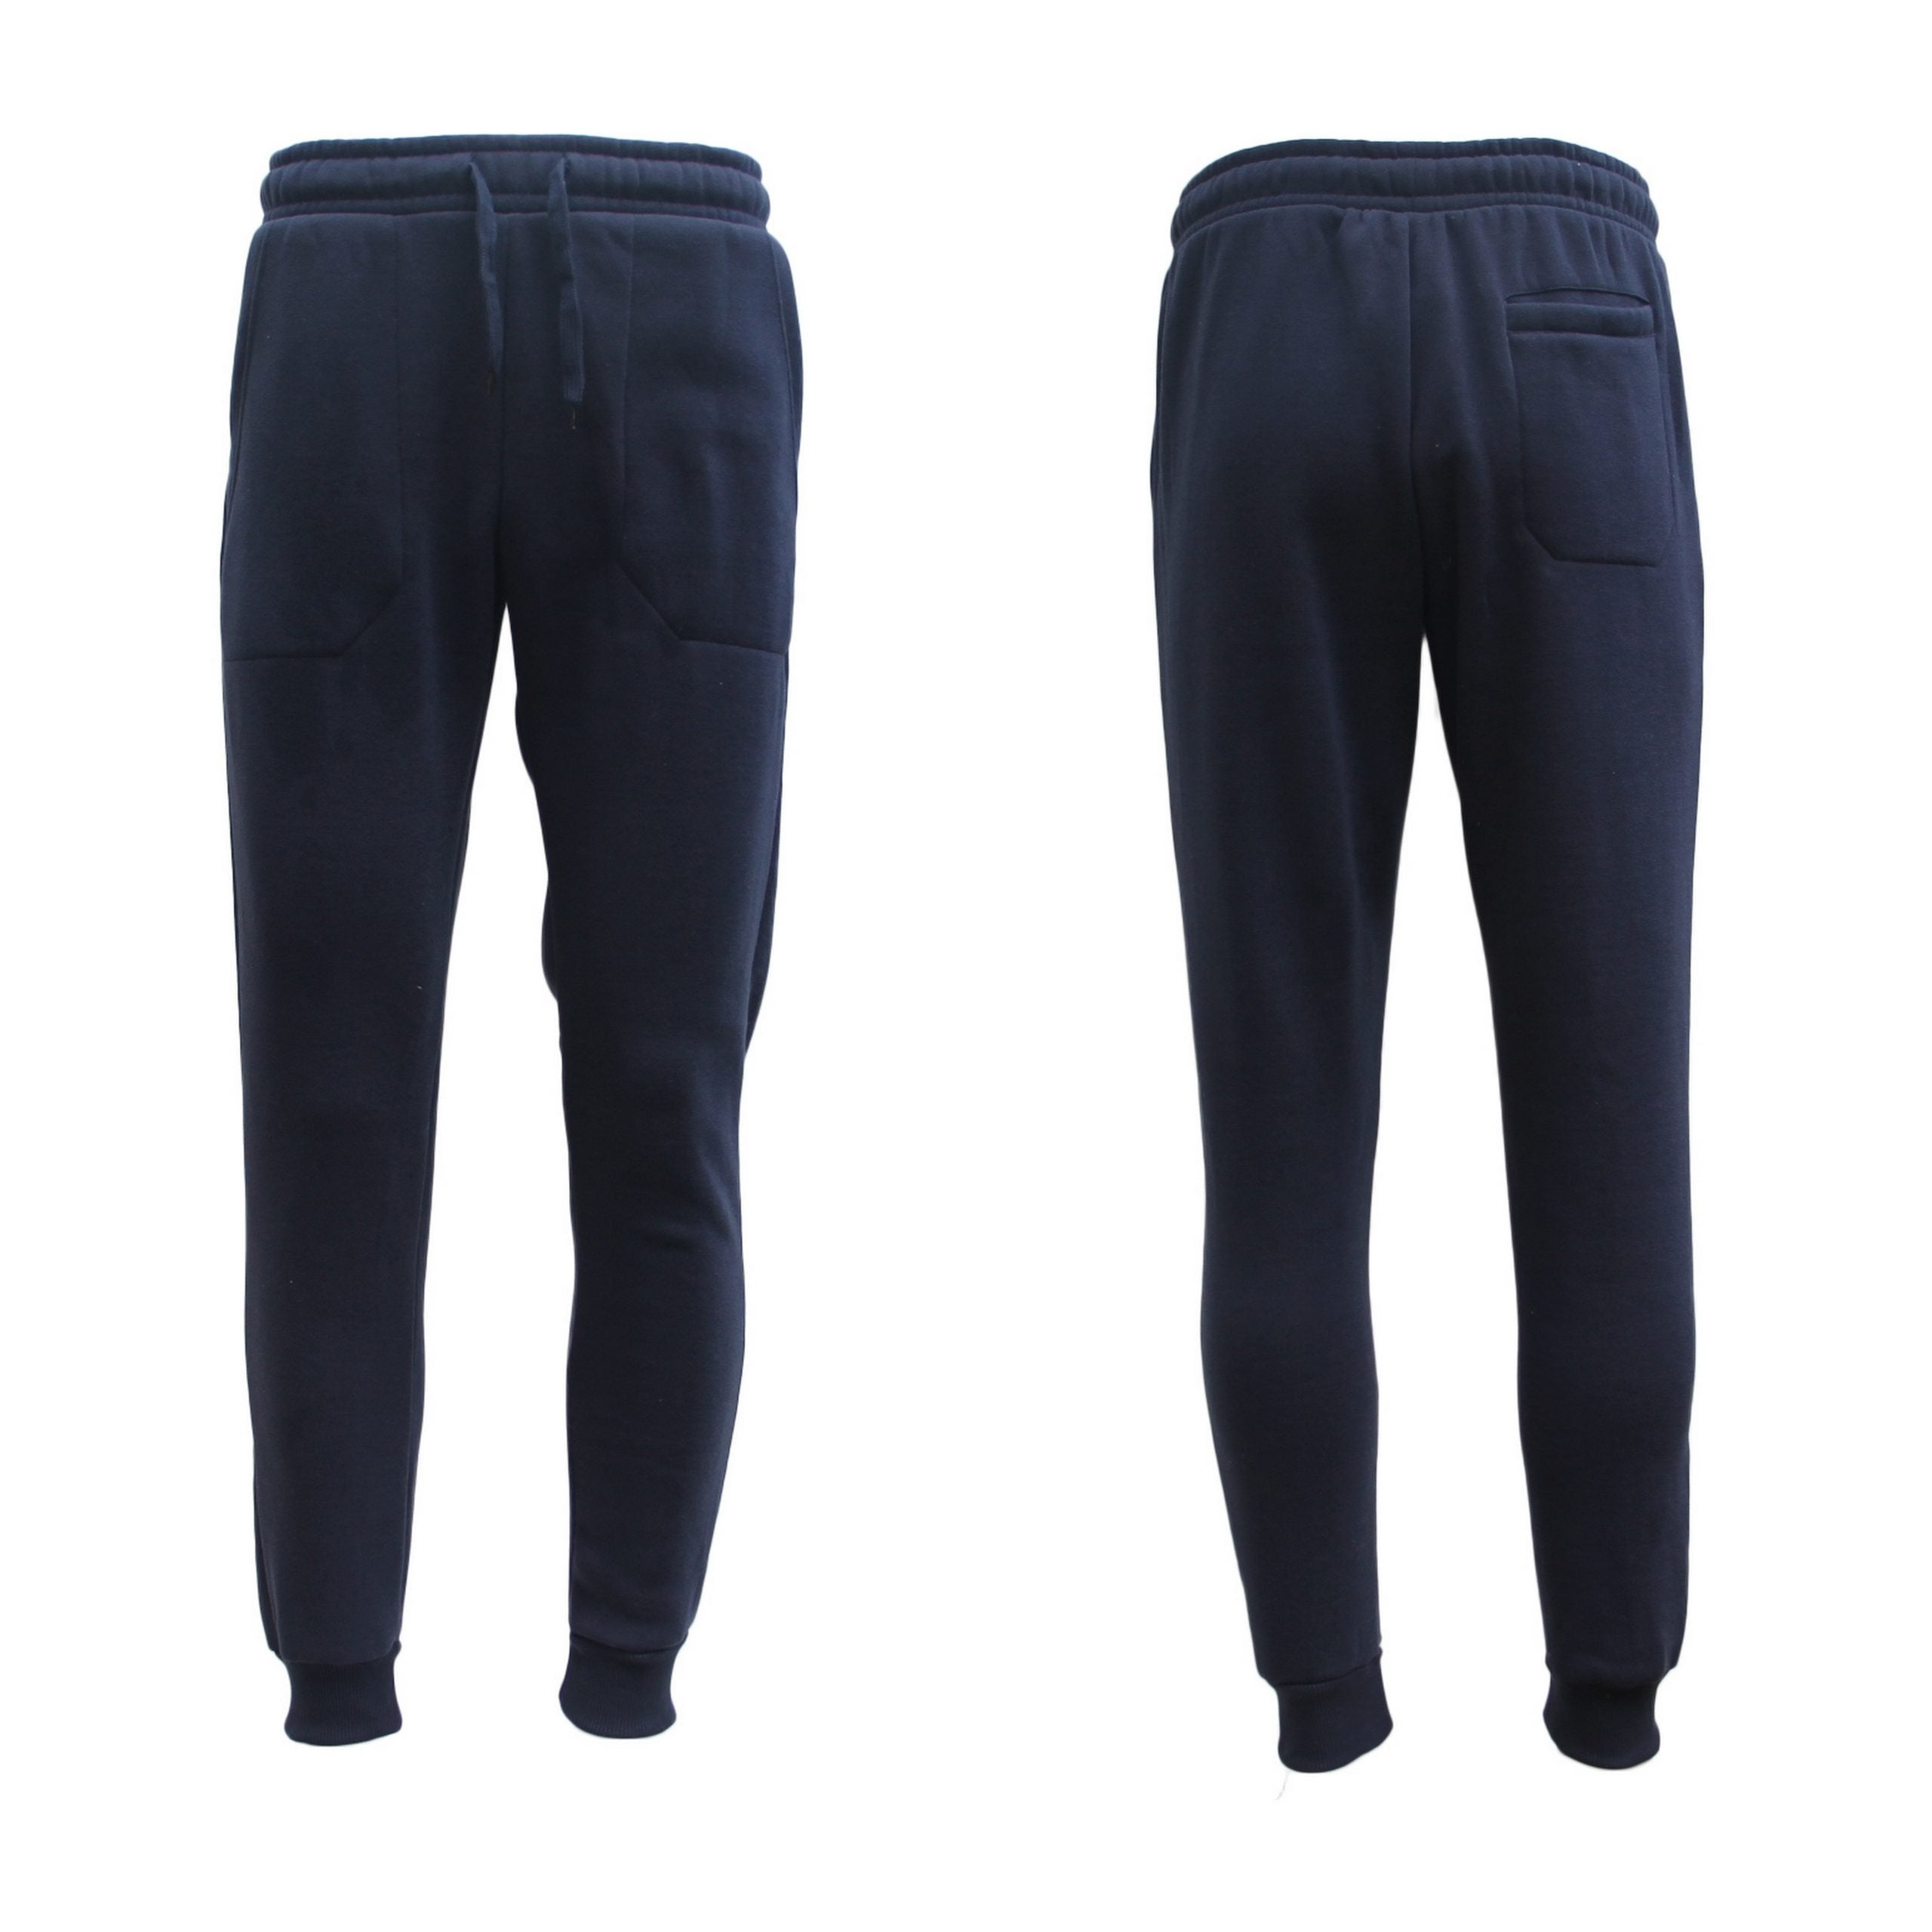 Mens Unisex Fleece Lined Sweat Track Pants Suit Casual Trackies Slim Cuff XS-6XL, Dark Grey, S